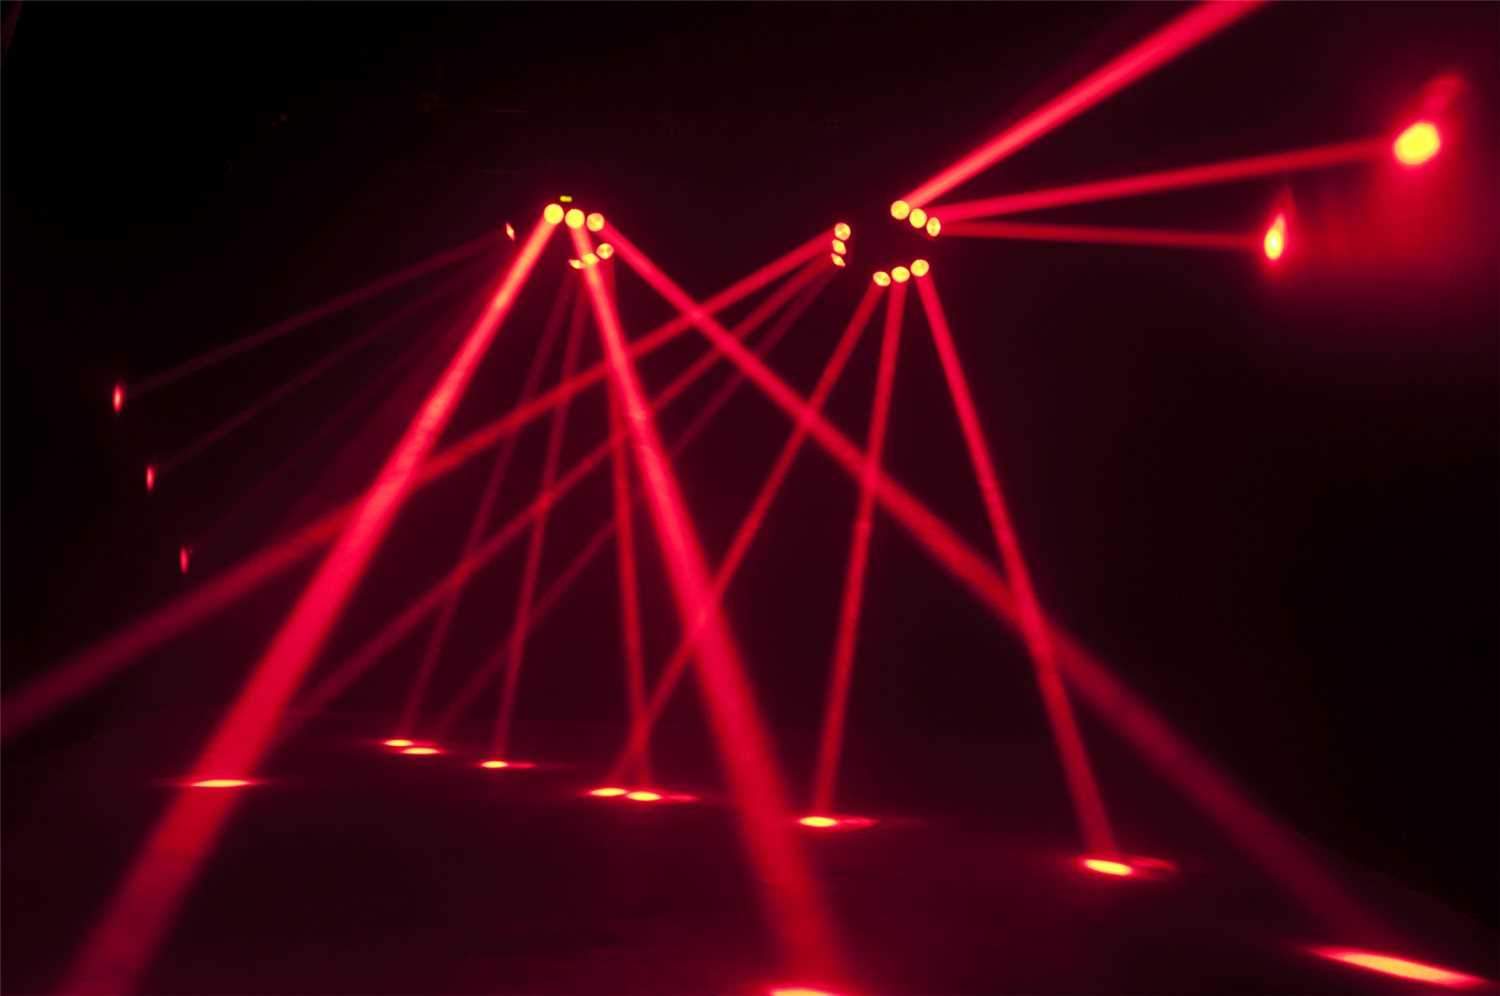 ADJ American DJ KAOS RGBW LED Moving Head Effect Light - PSSL ProSound and Stage Lighting